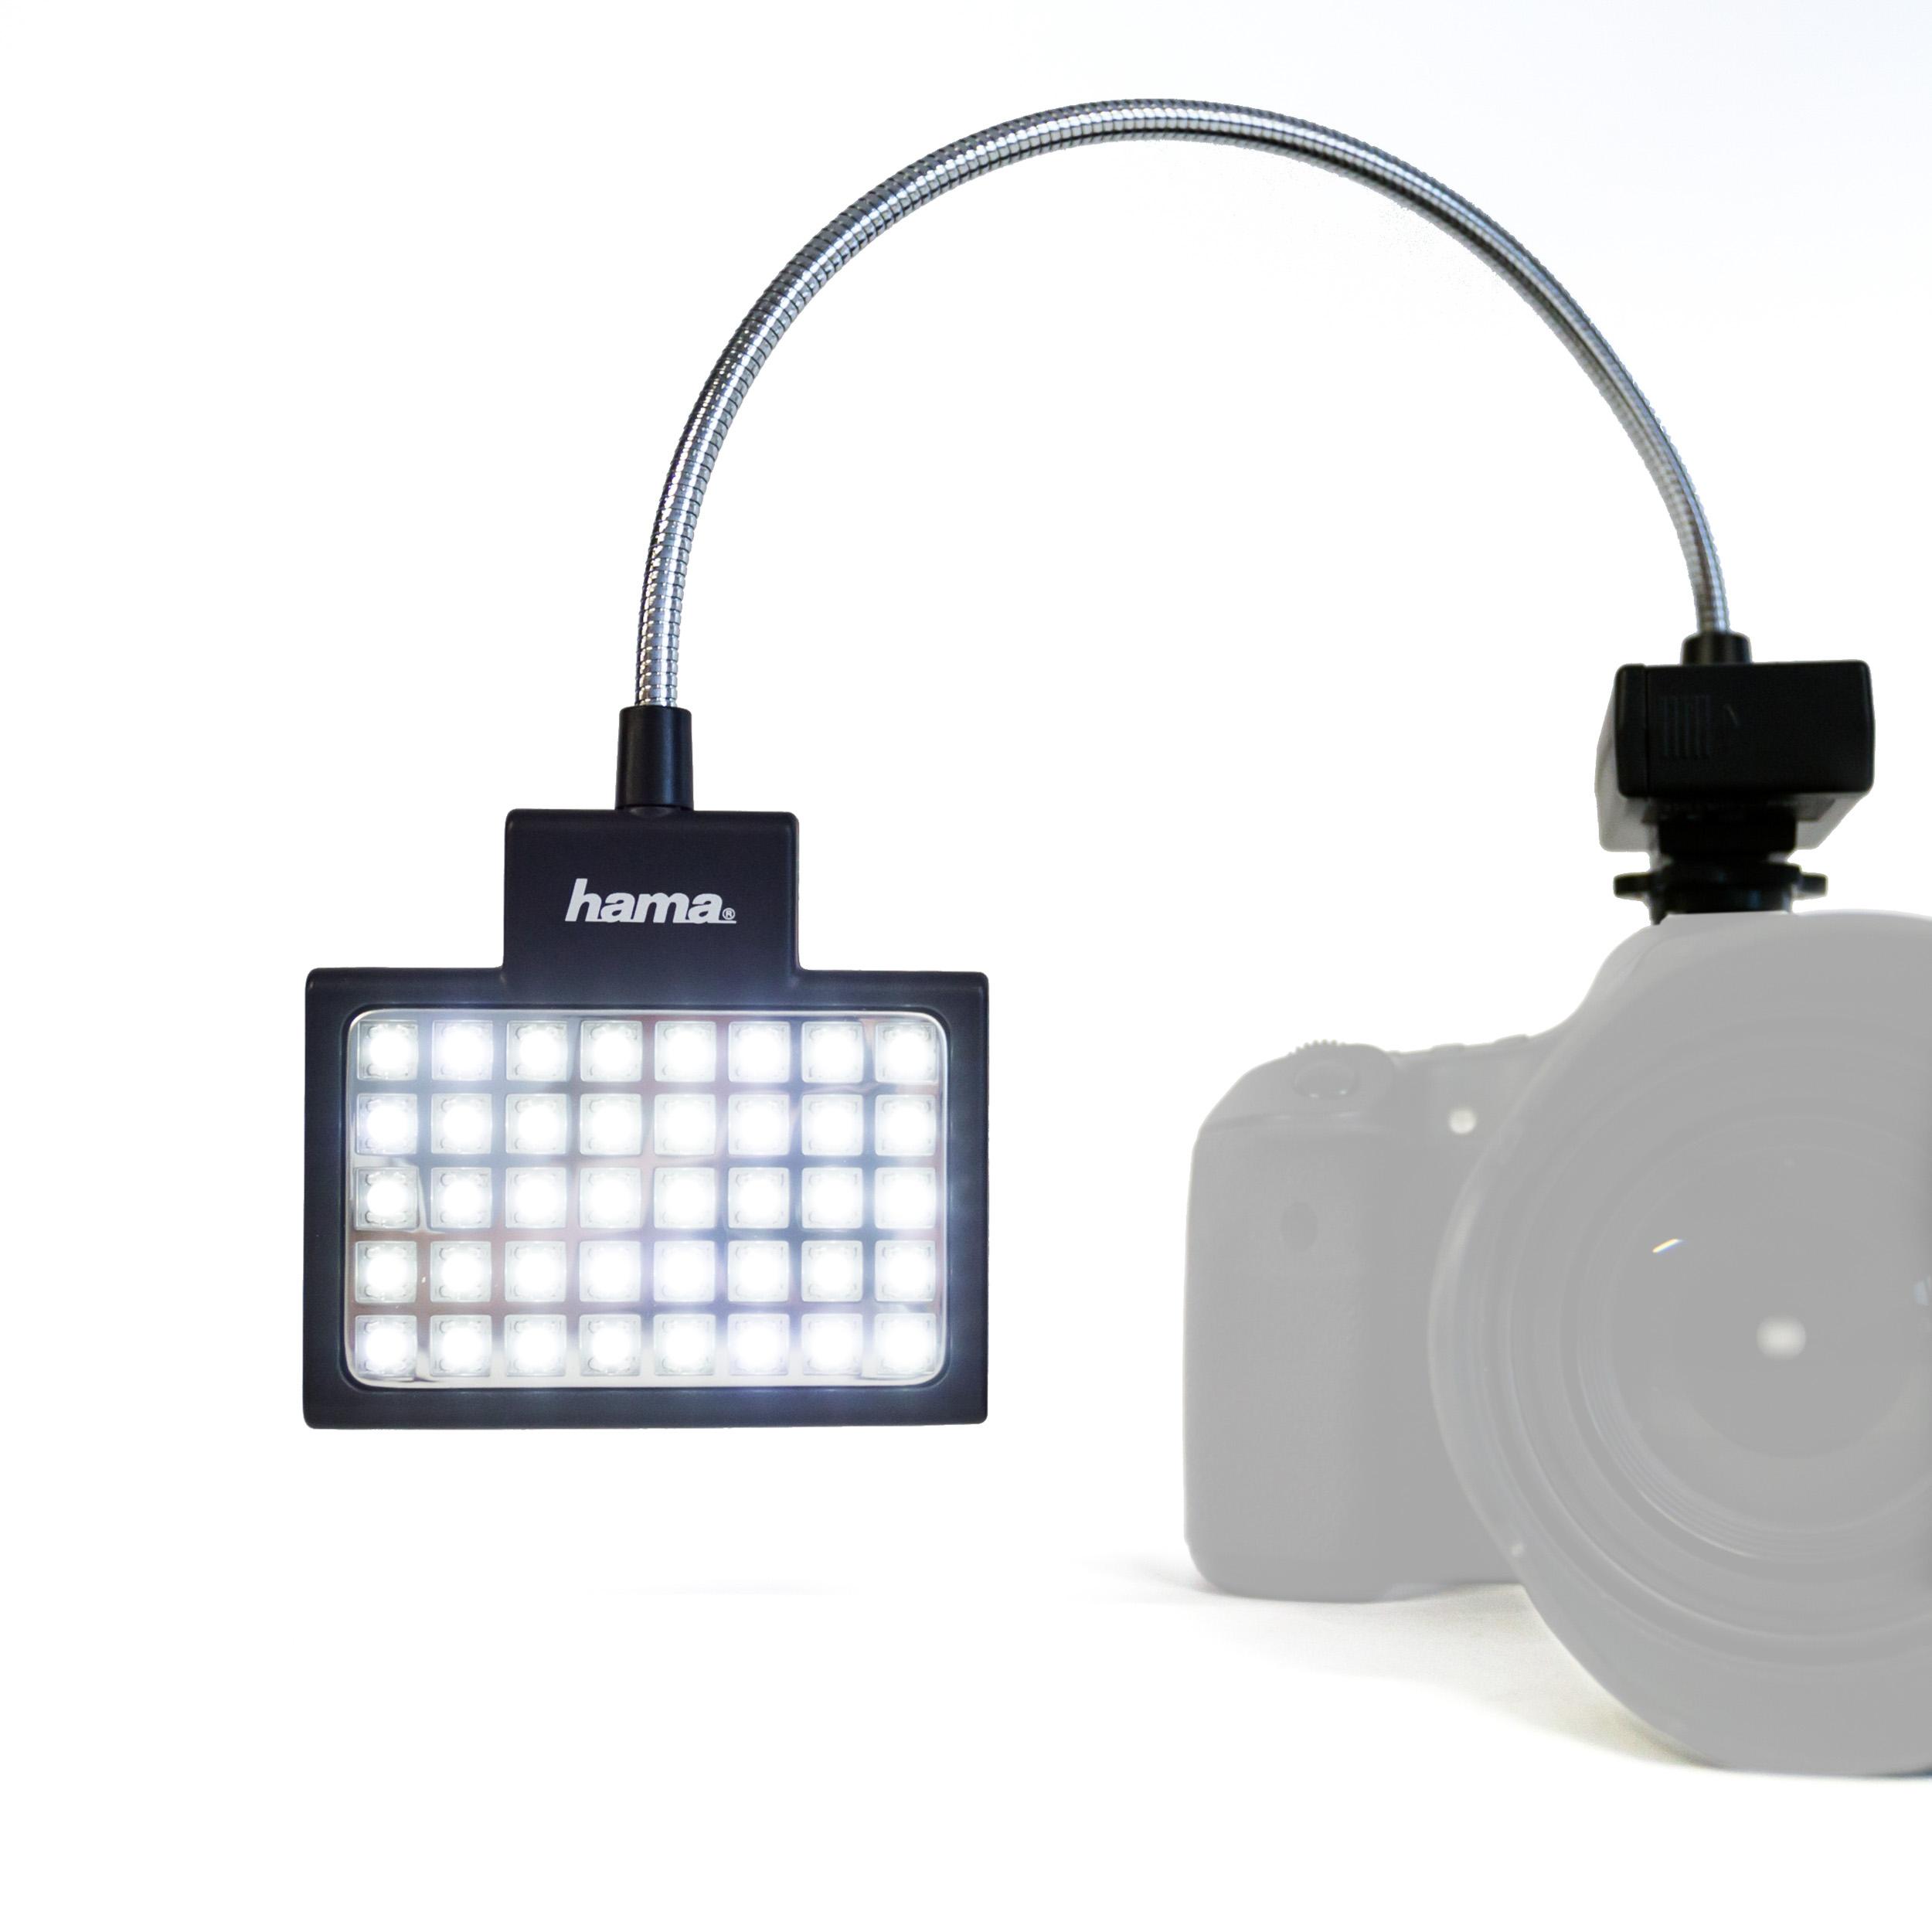 Hama 40 LED Foto/Video schmaler Beleuchtung Panel 